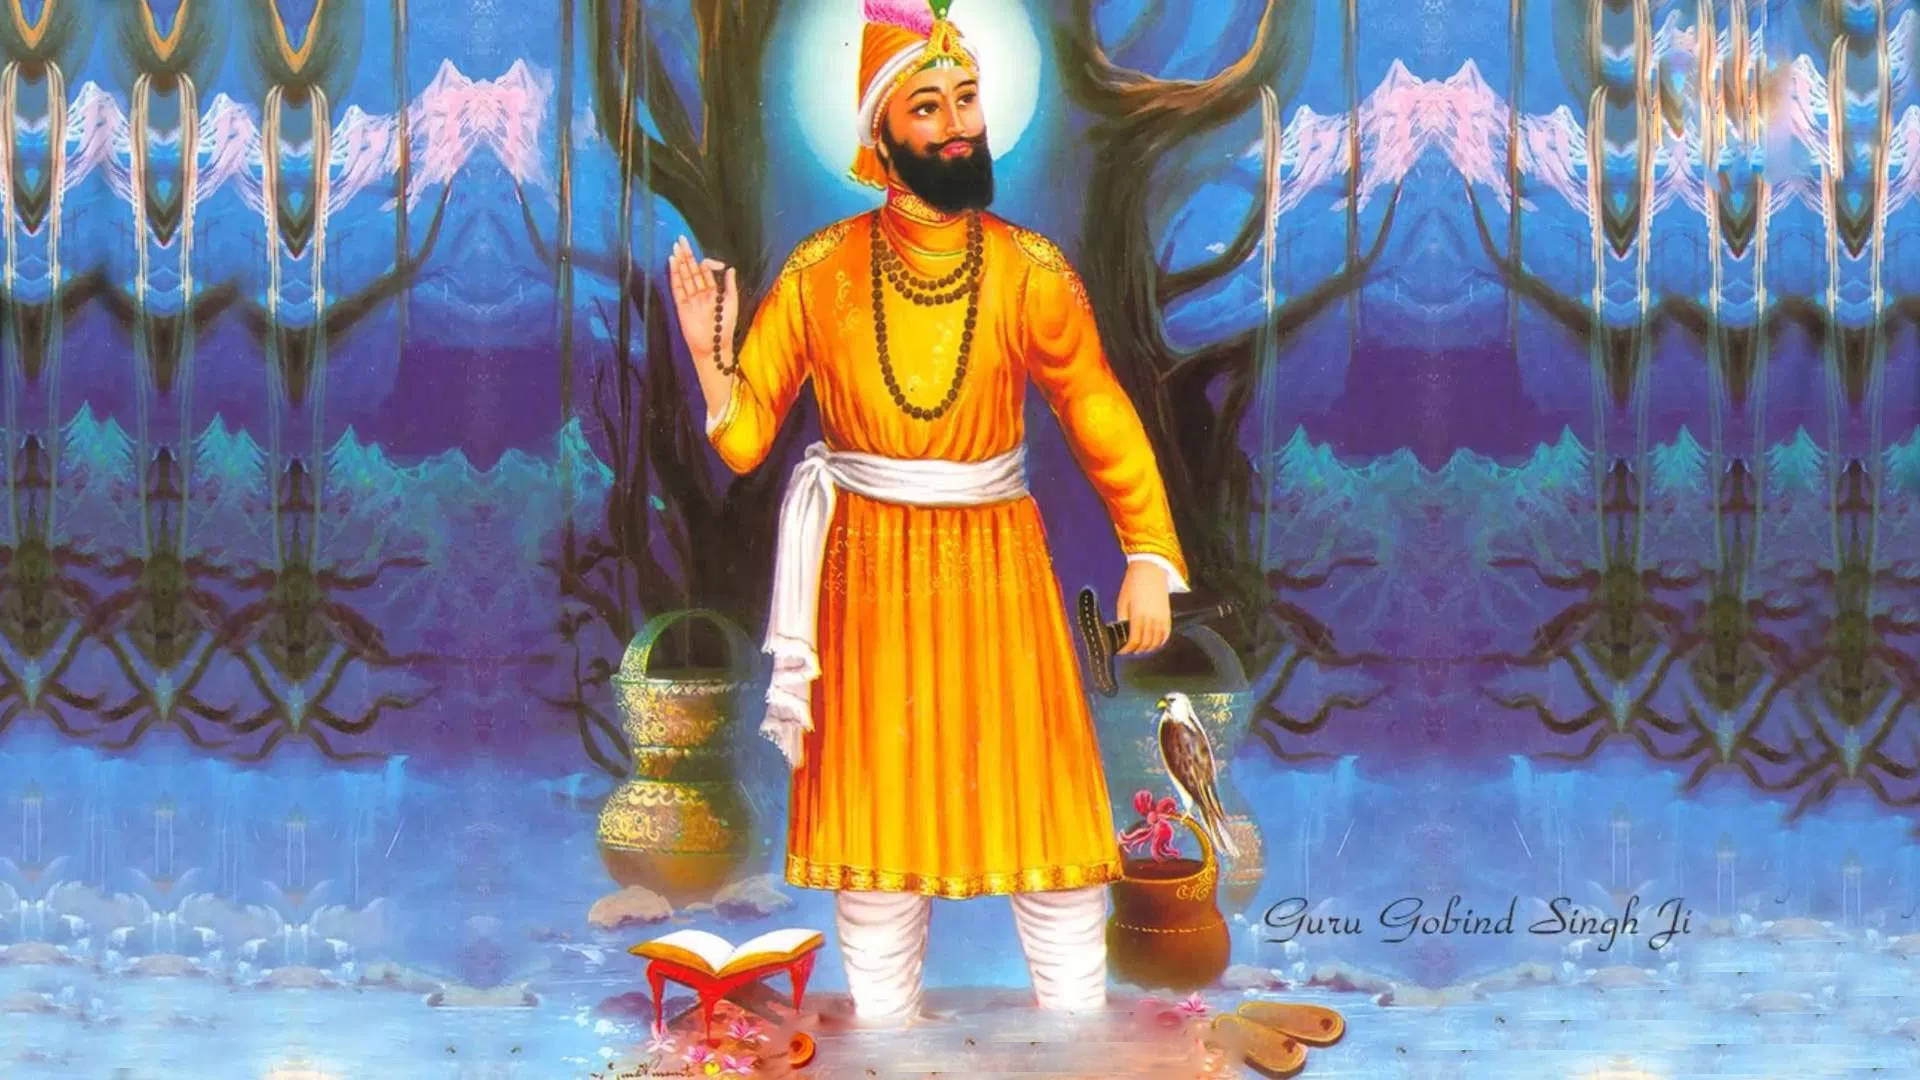 Guru Gobind Singh Ji Traditional Art Background